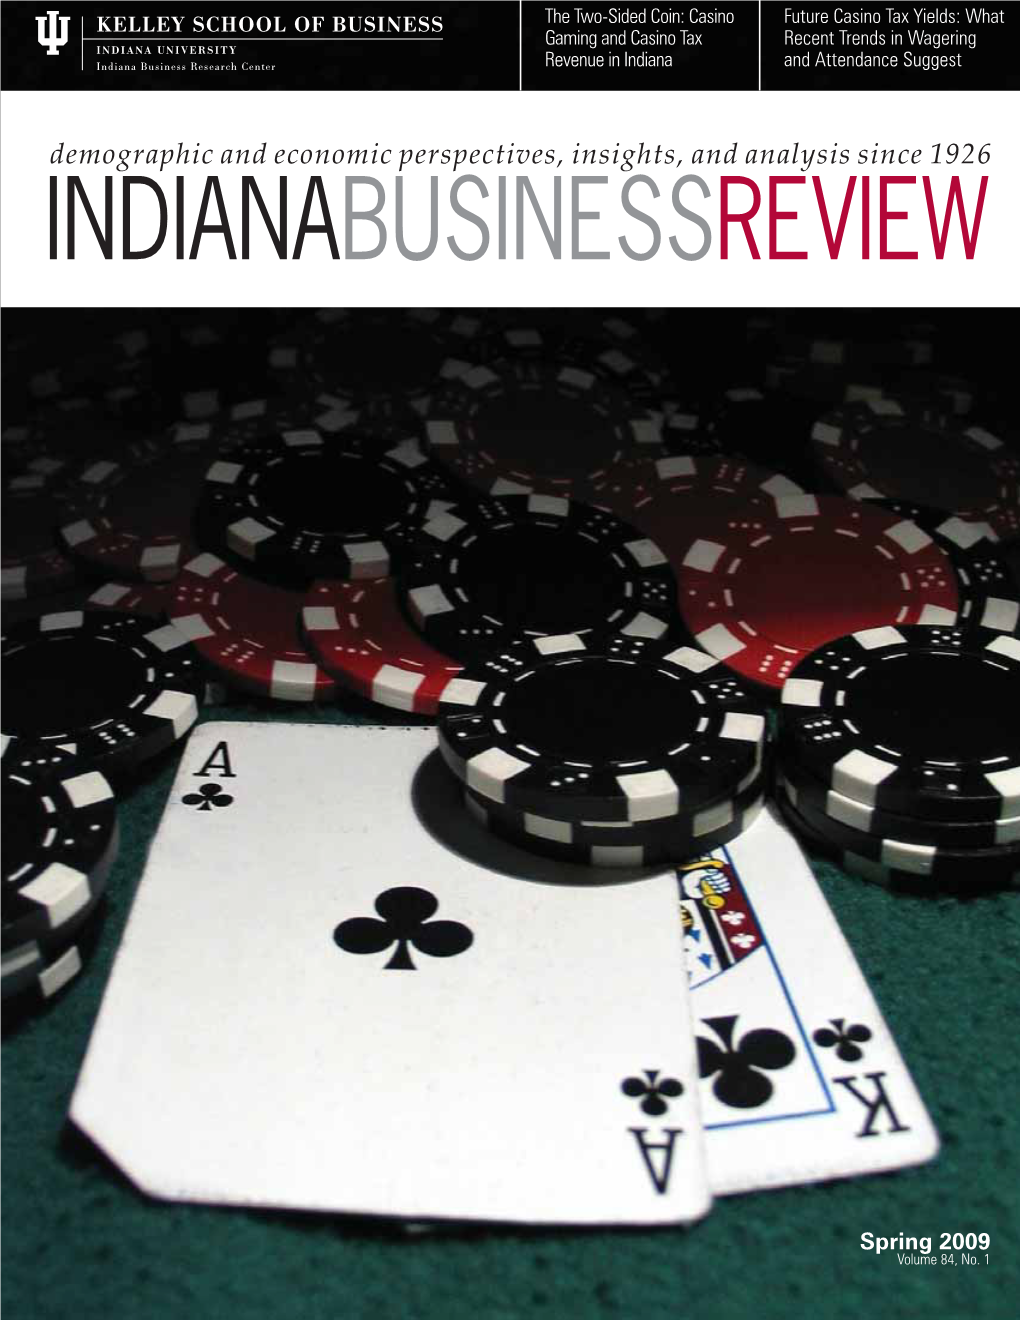 Casino Gaming and Academic Programs 1 Casino Tax Revenue in Indiana Patricia P